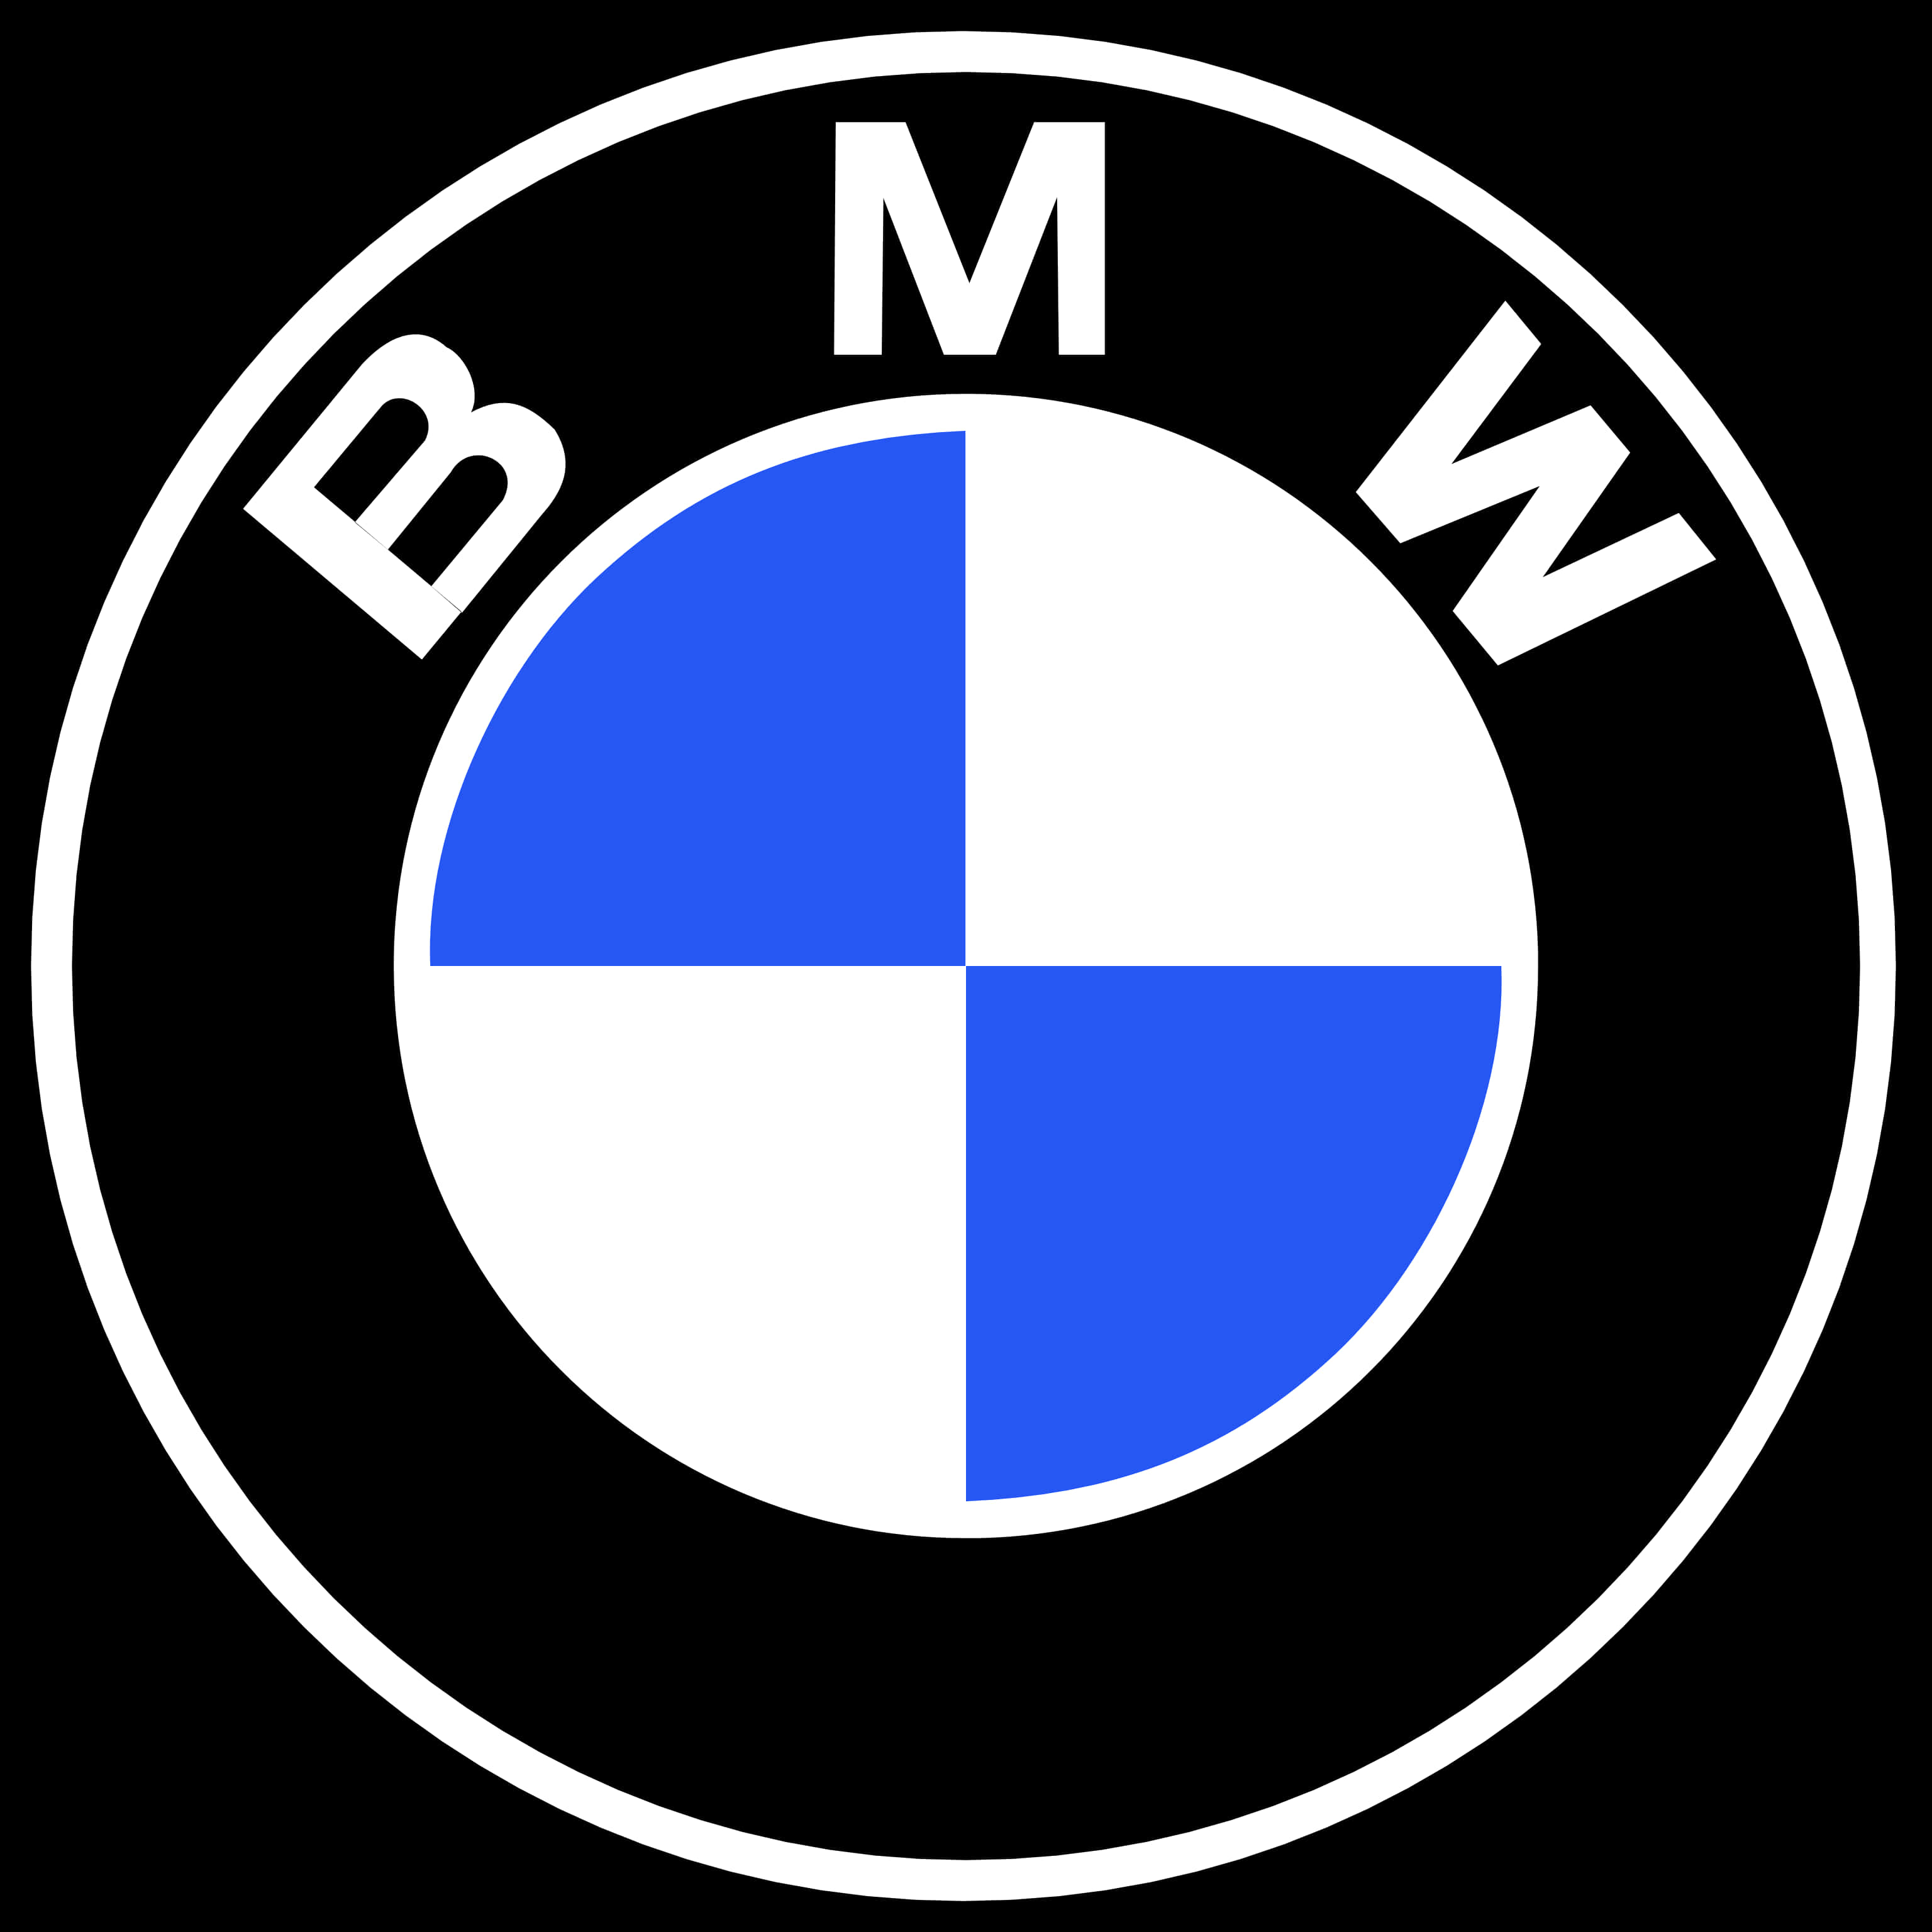 B M W Logo Blackand White PNG image